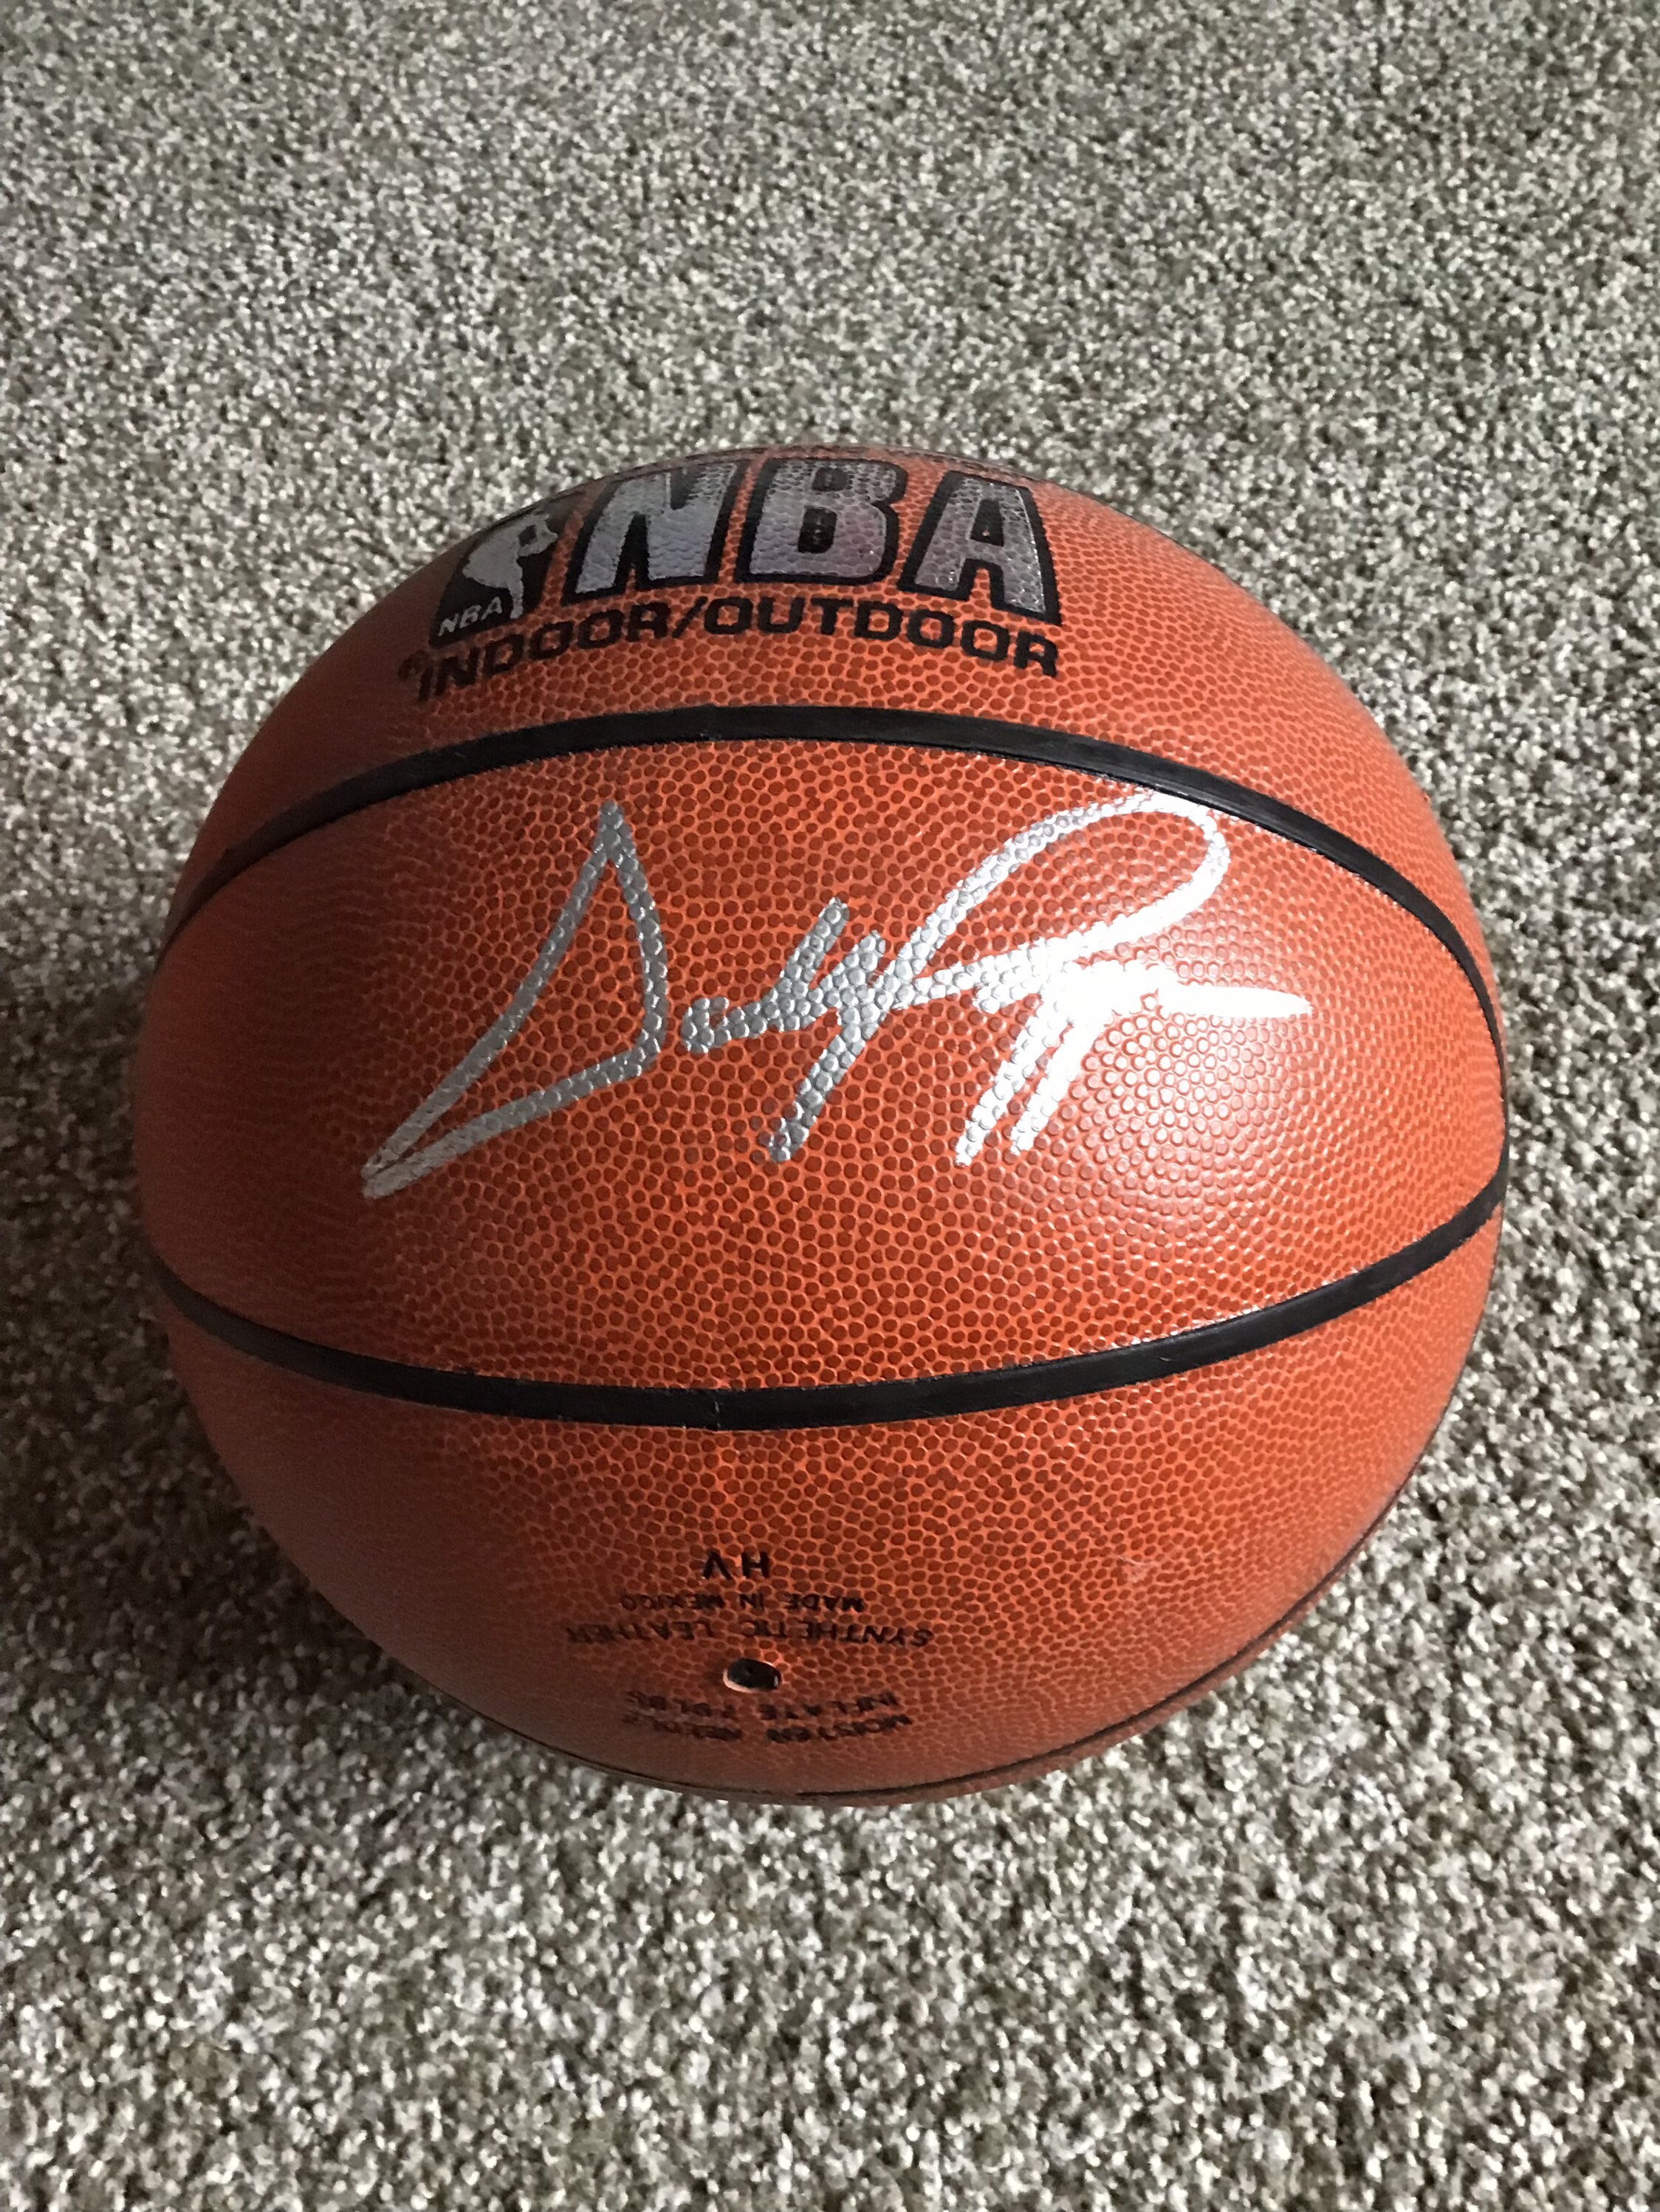 Scottie Pippen Chicago Bulls Signed Autographed Black Custom